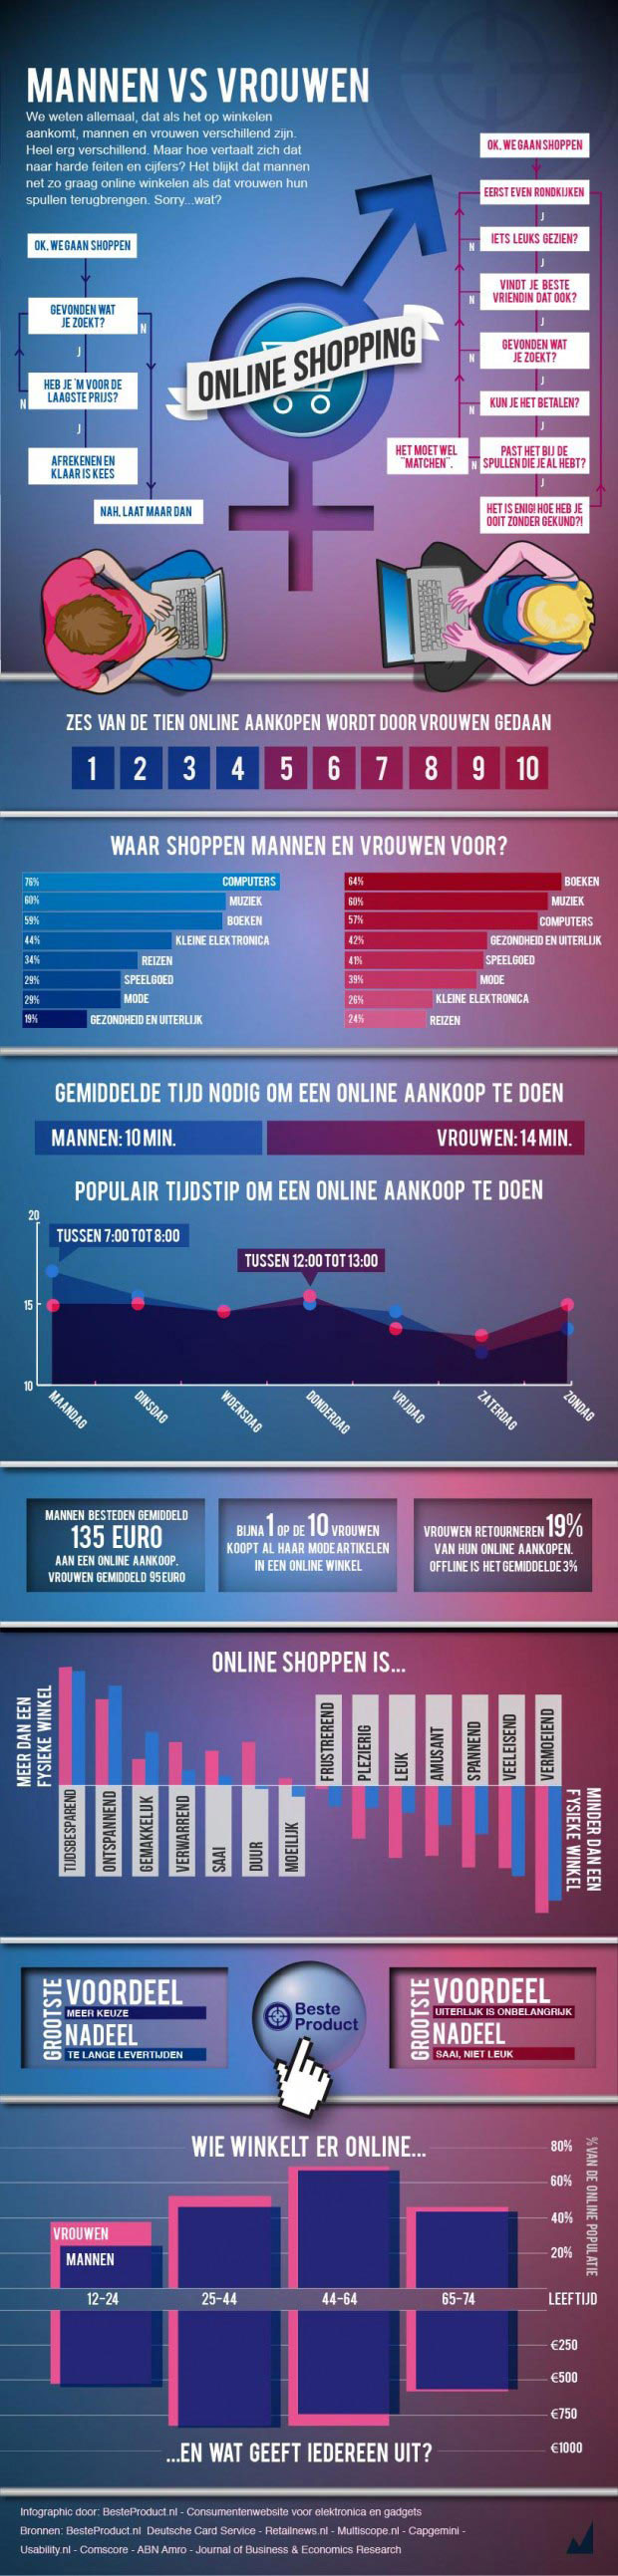 Infographic Online shoppen mannen vs vrouwen